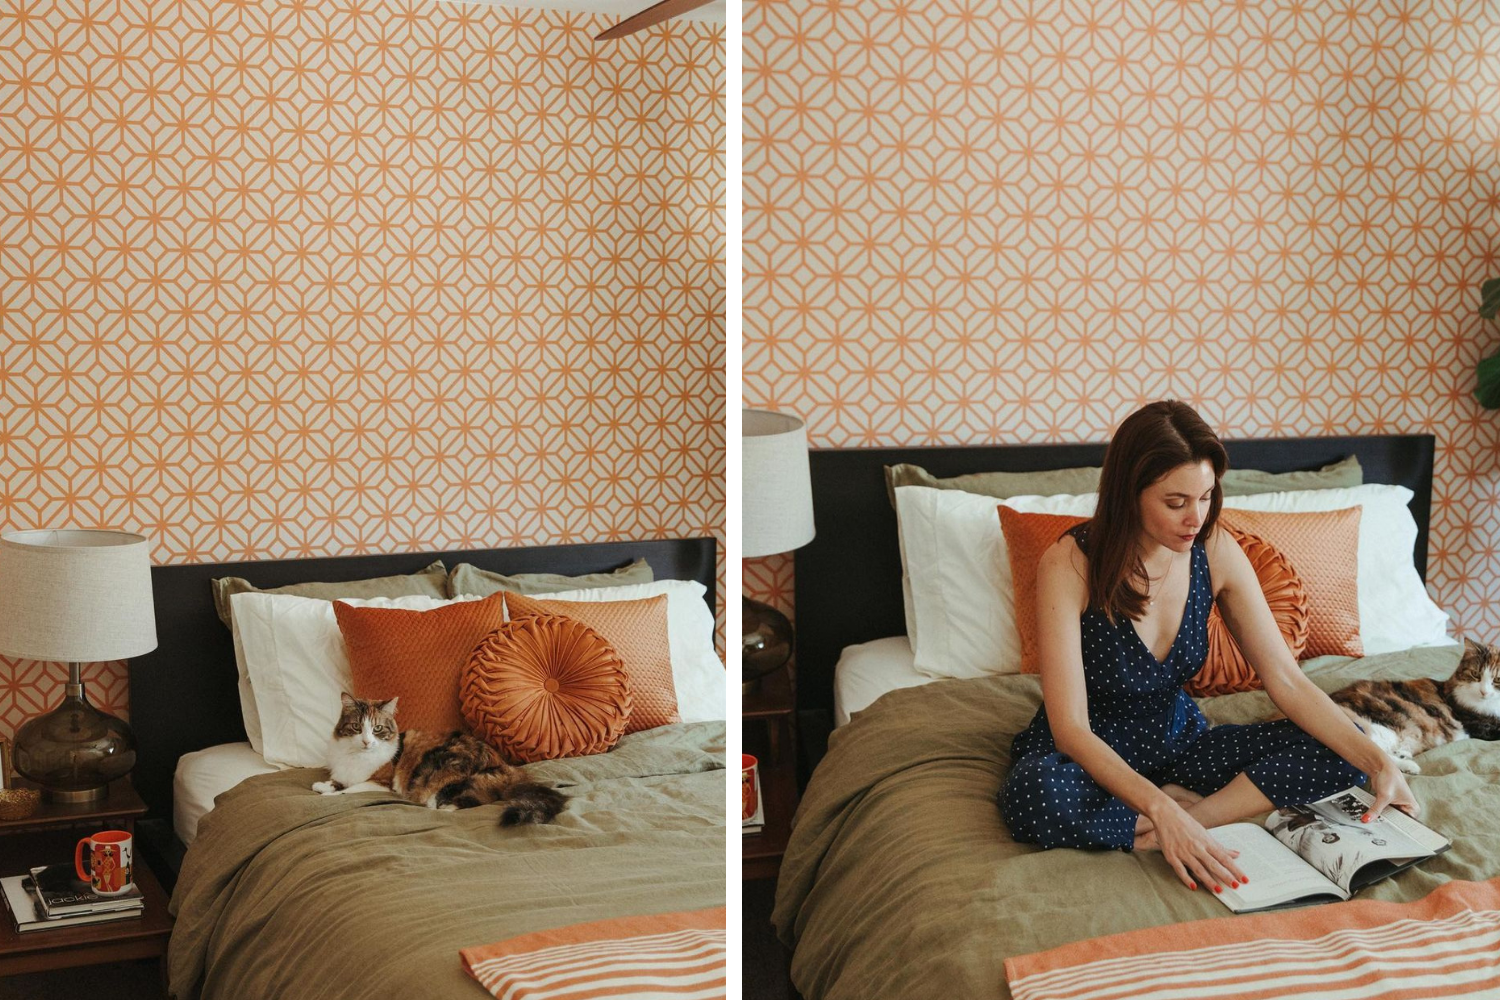 Bedroom wallpaper with orange geometric design